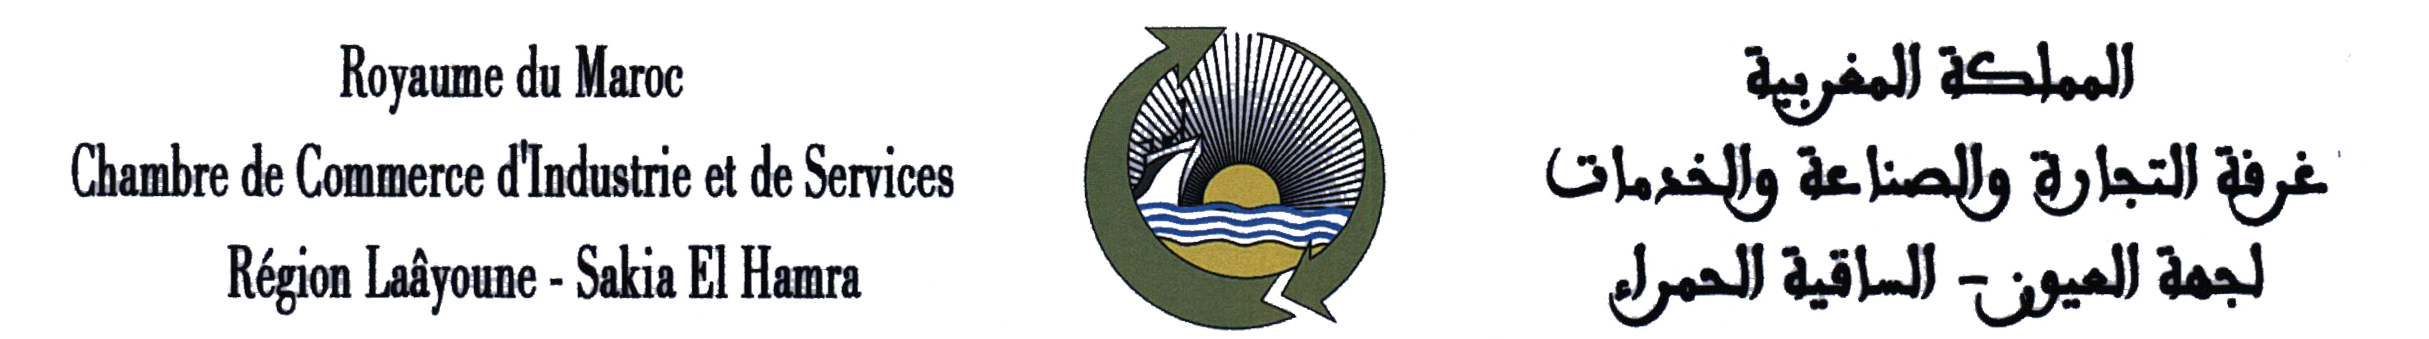 logo-ccis-laayoune-sakia-el-hamra